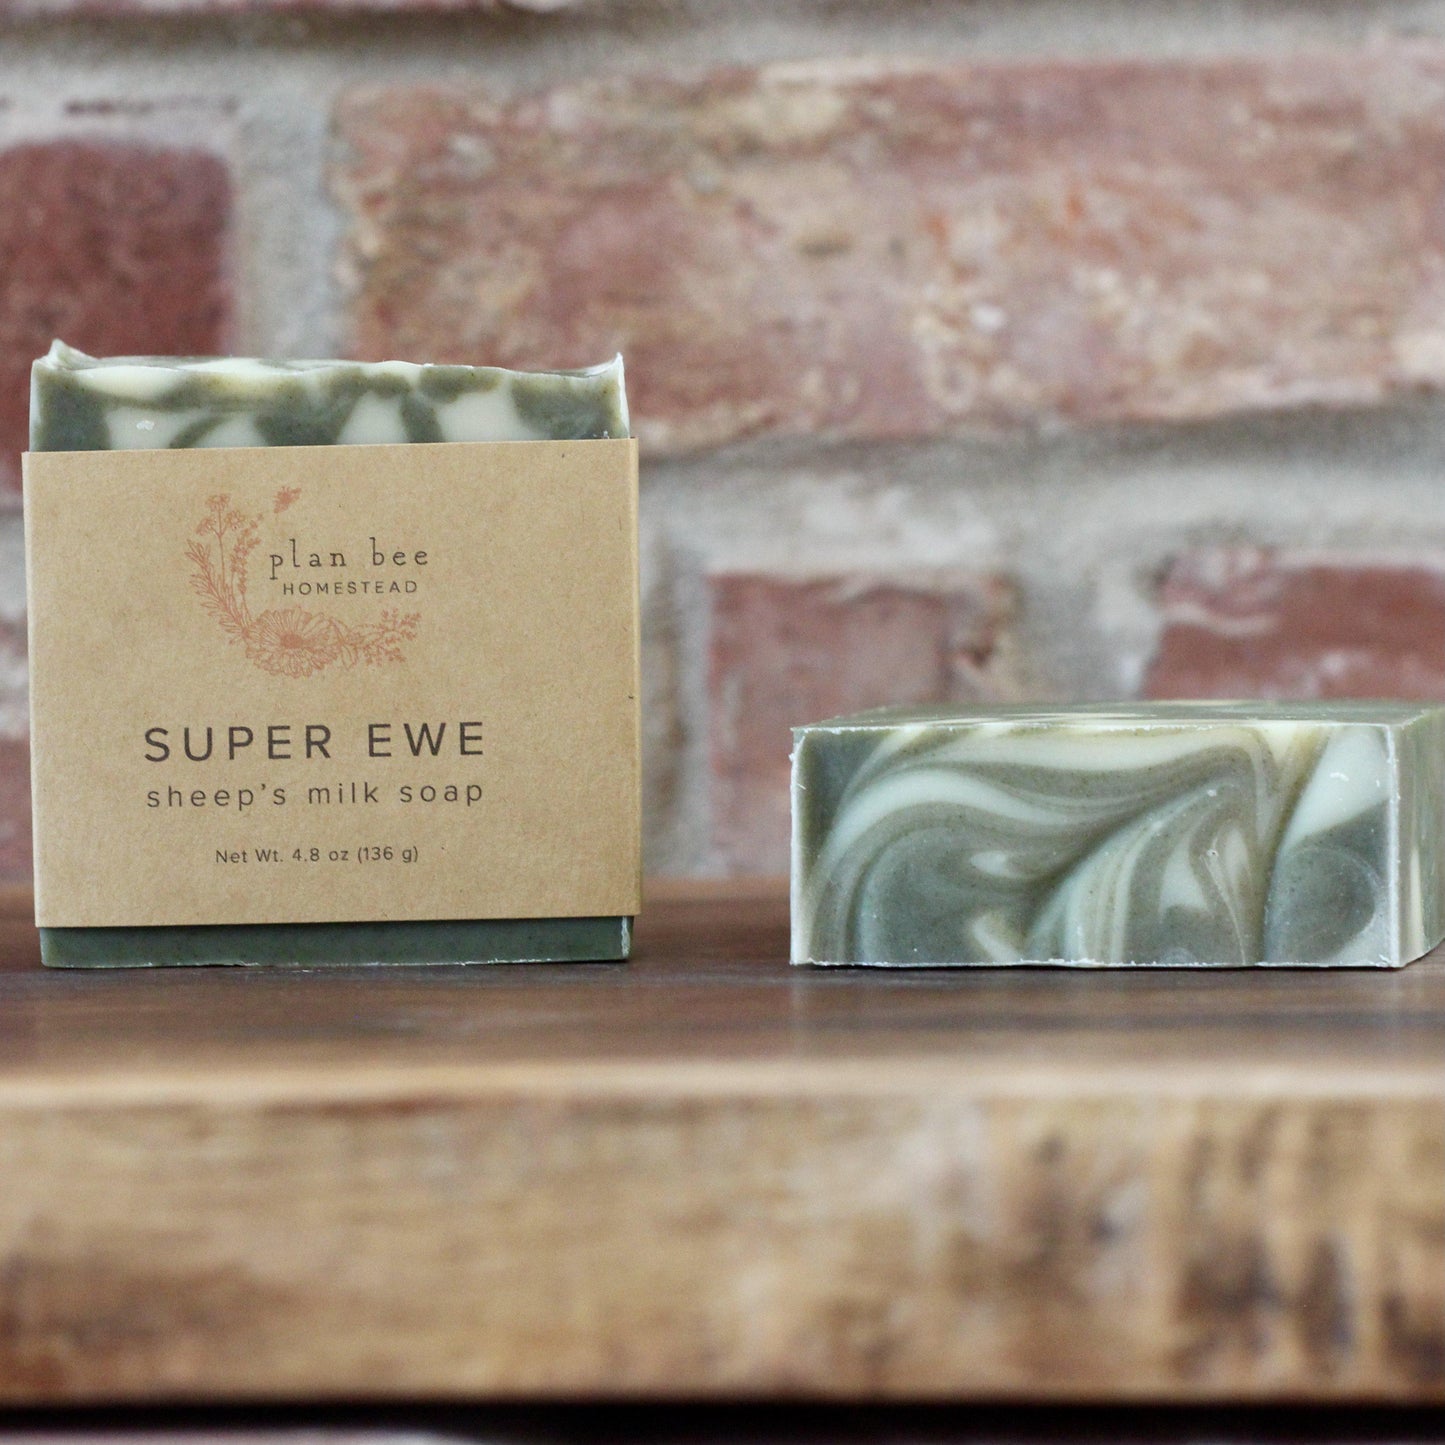 Super Ewe - Essential Oil Scented Sheep's Milk Soap